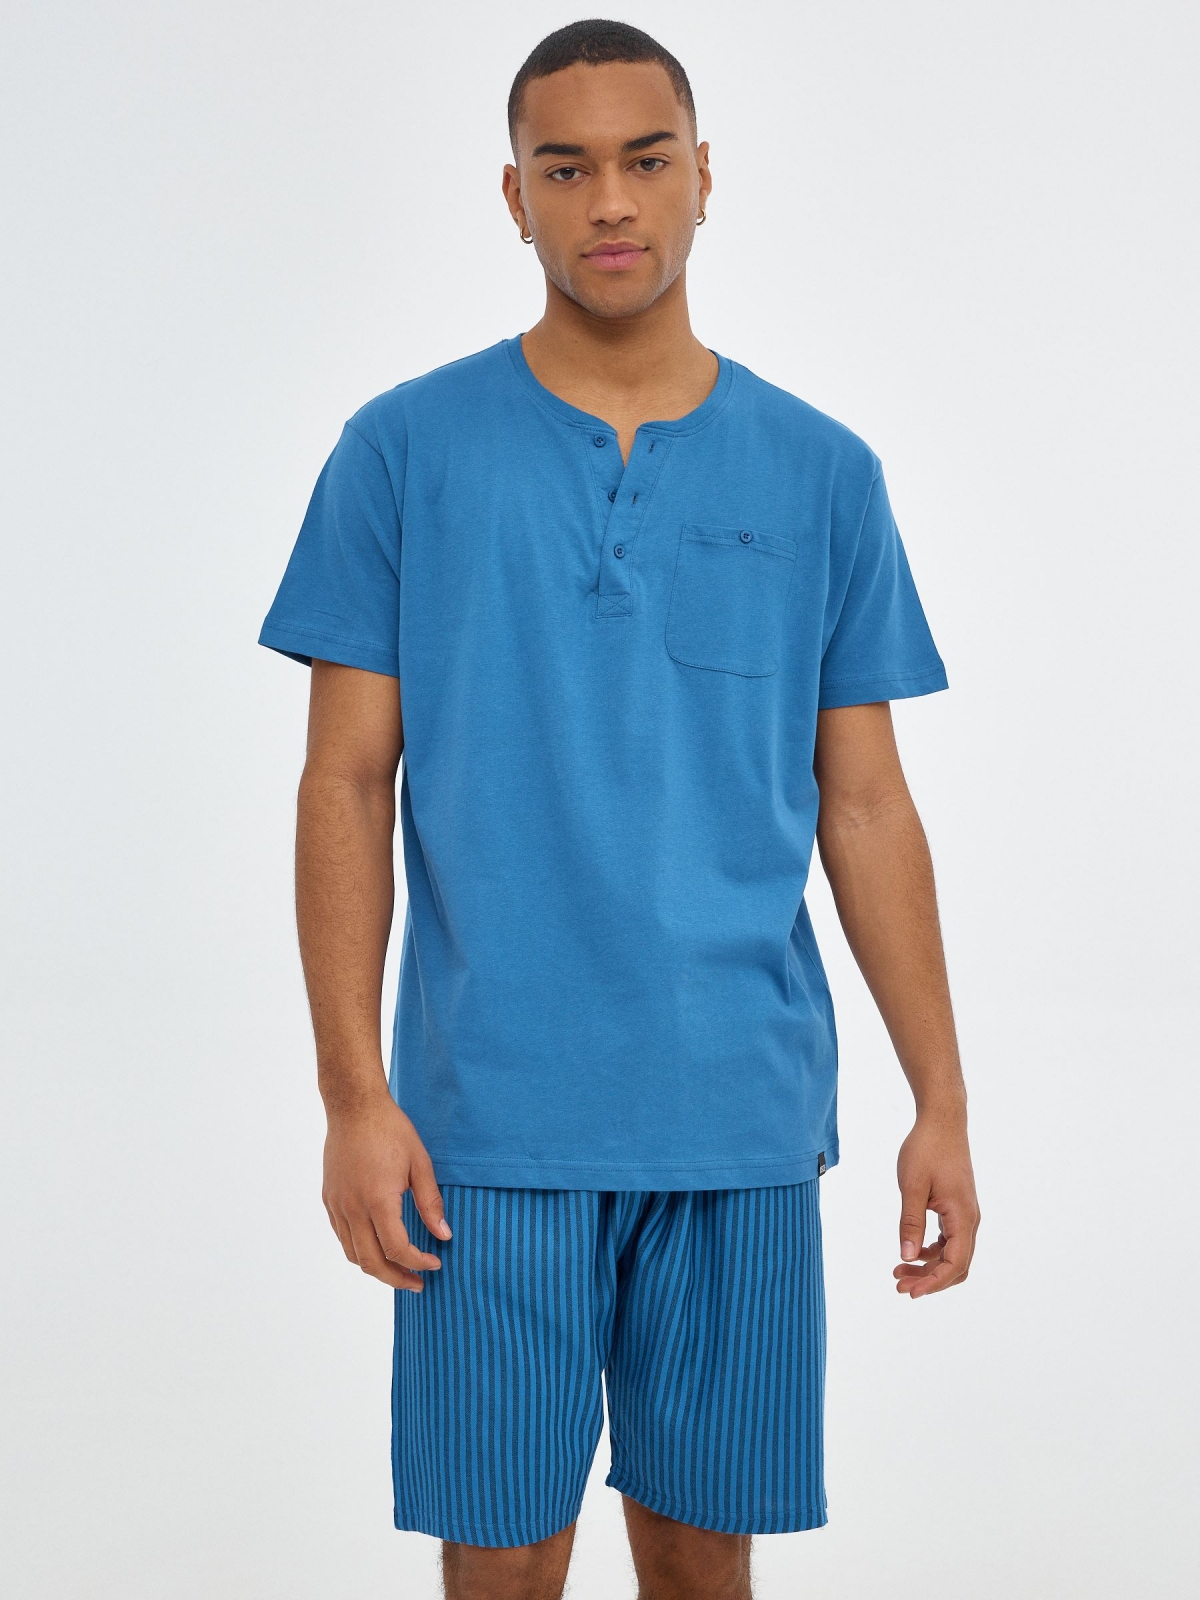 Men's pajamas striped pants blue front view